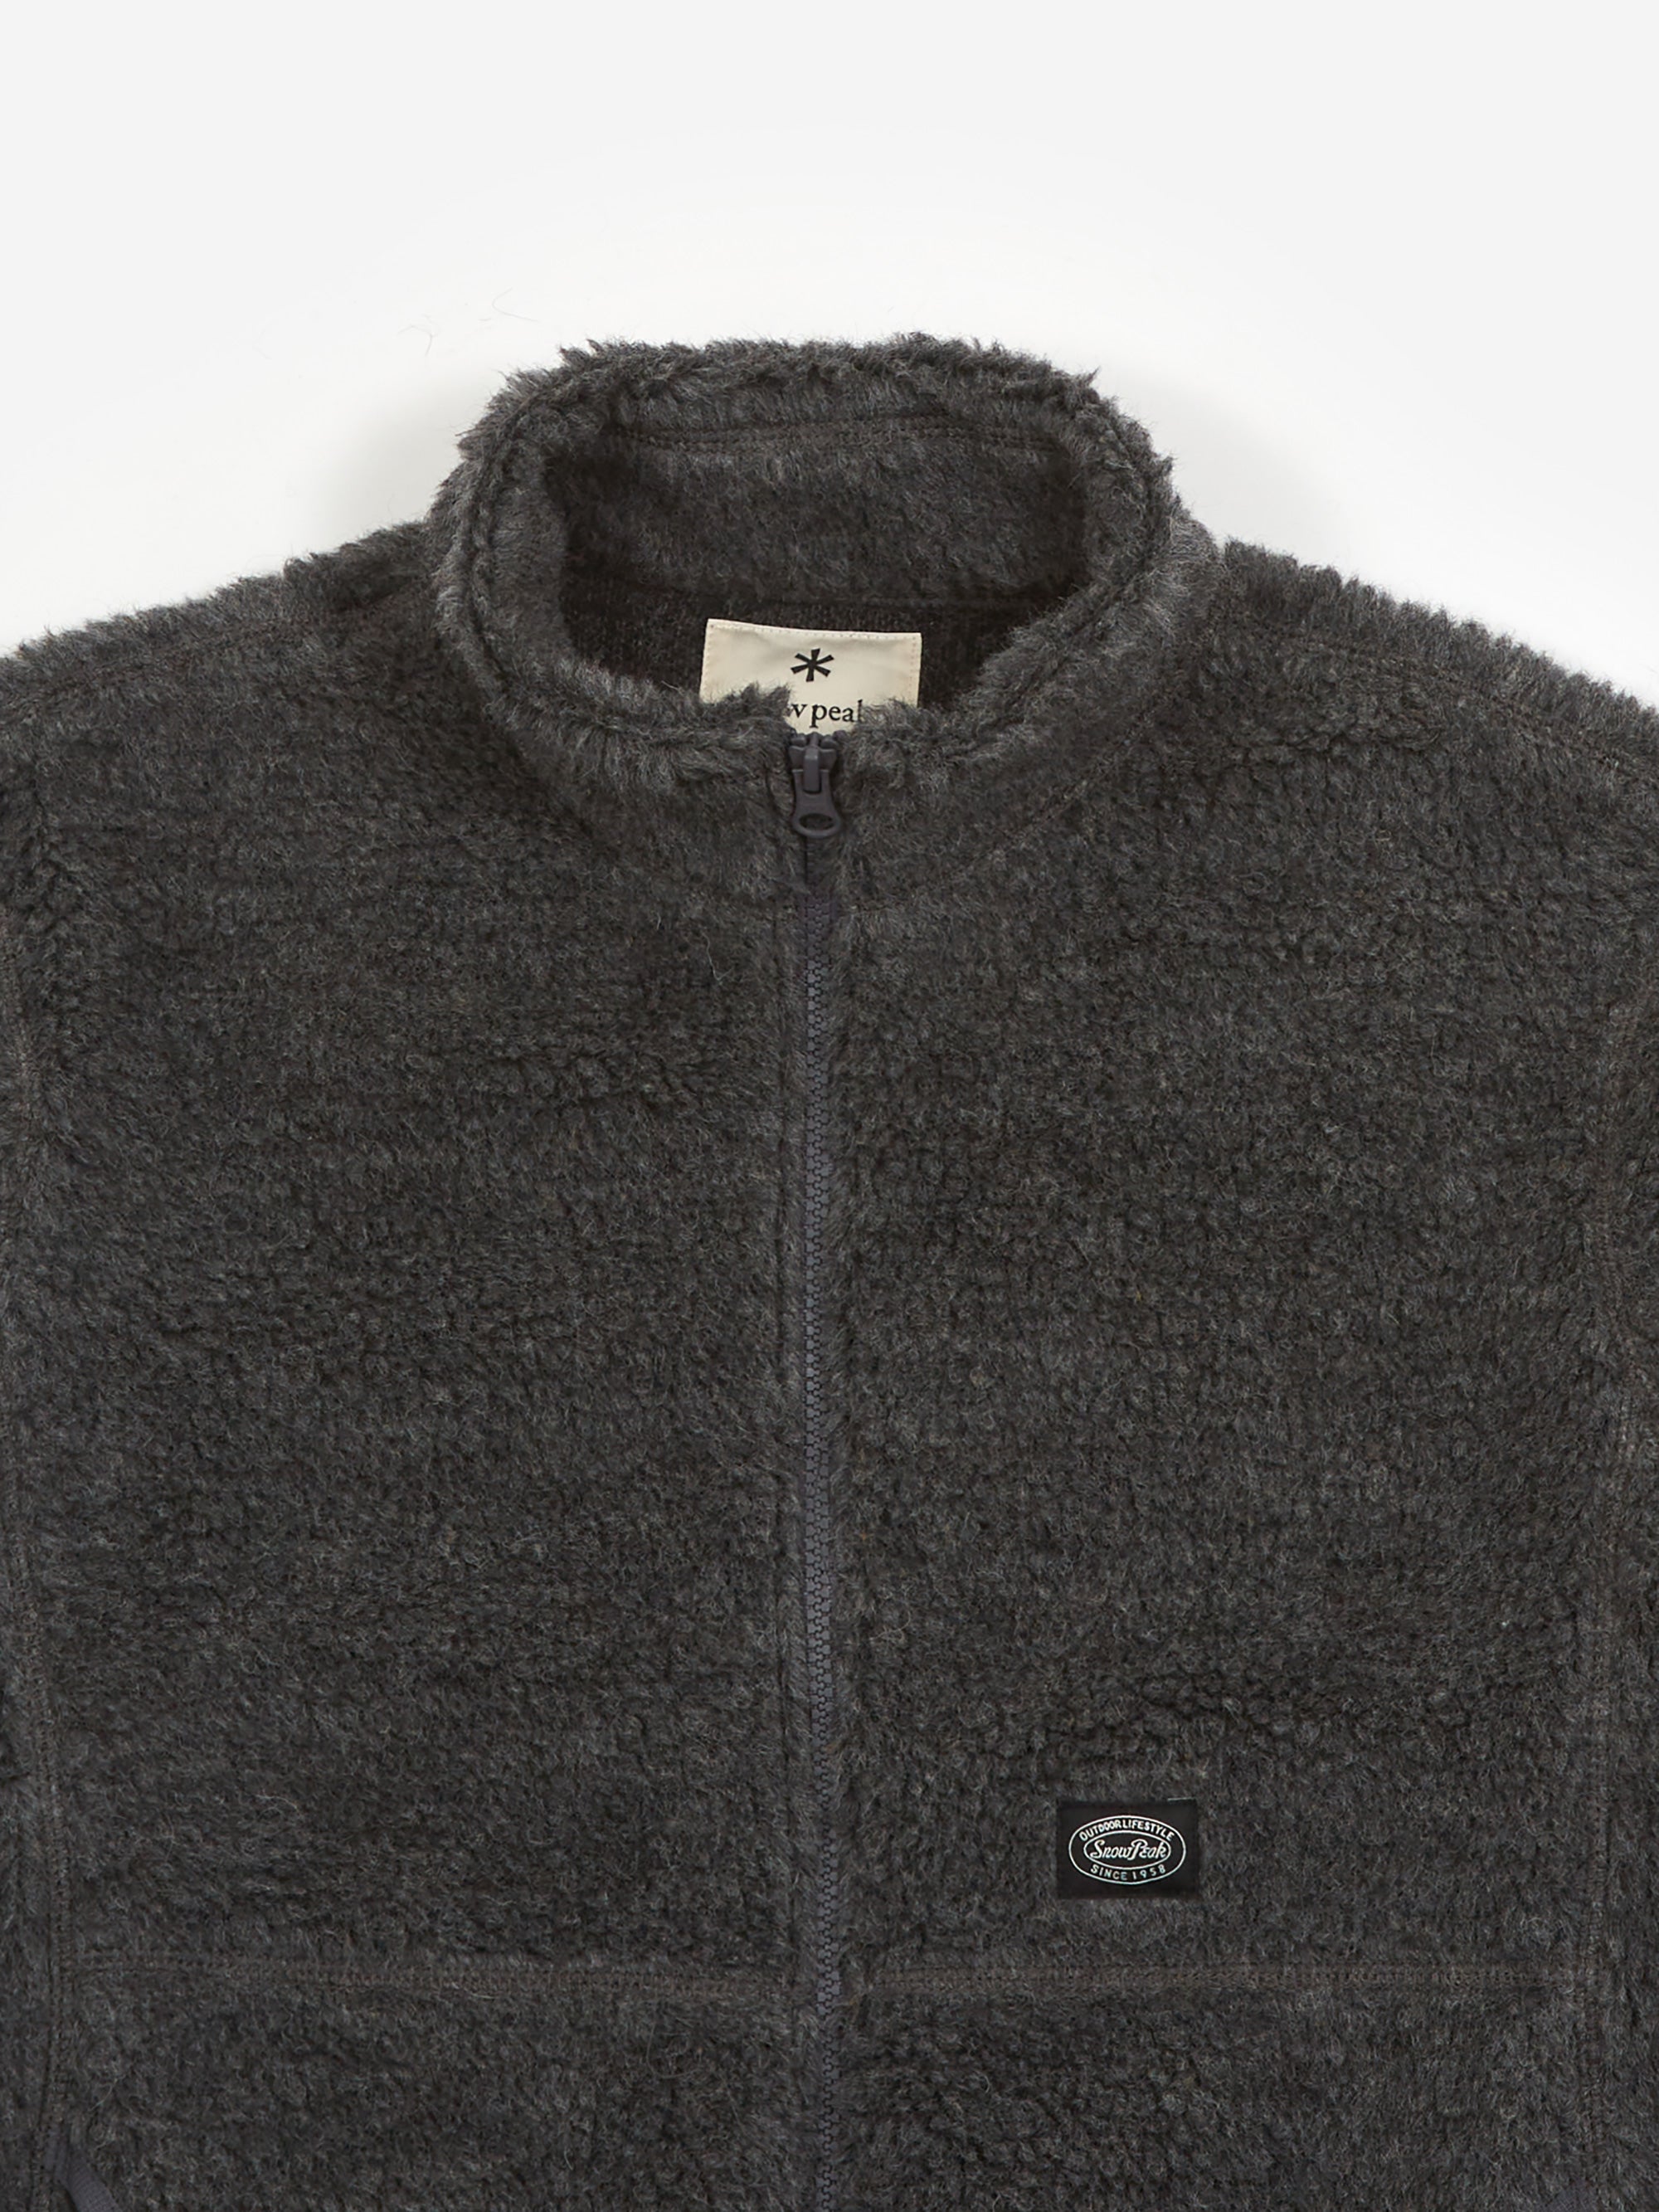 Snow Peak Wool Fleece Jacket - Charcoal